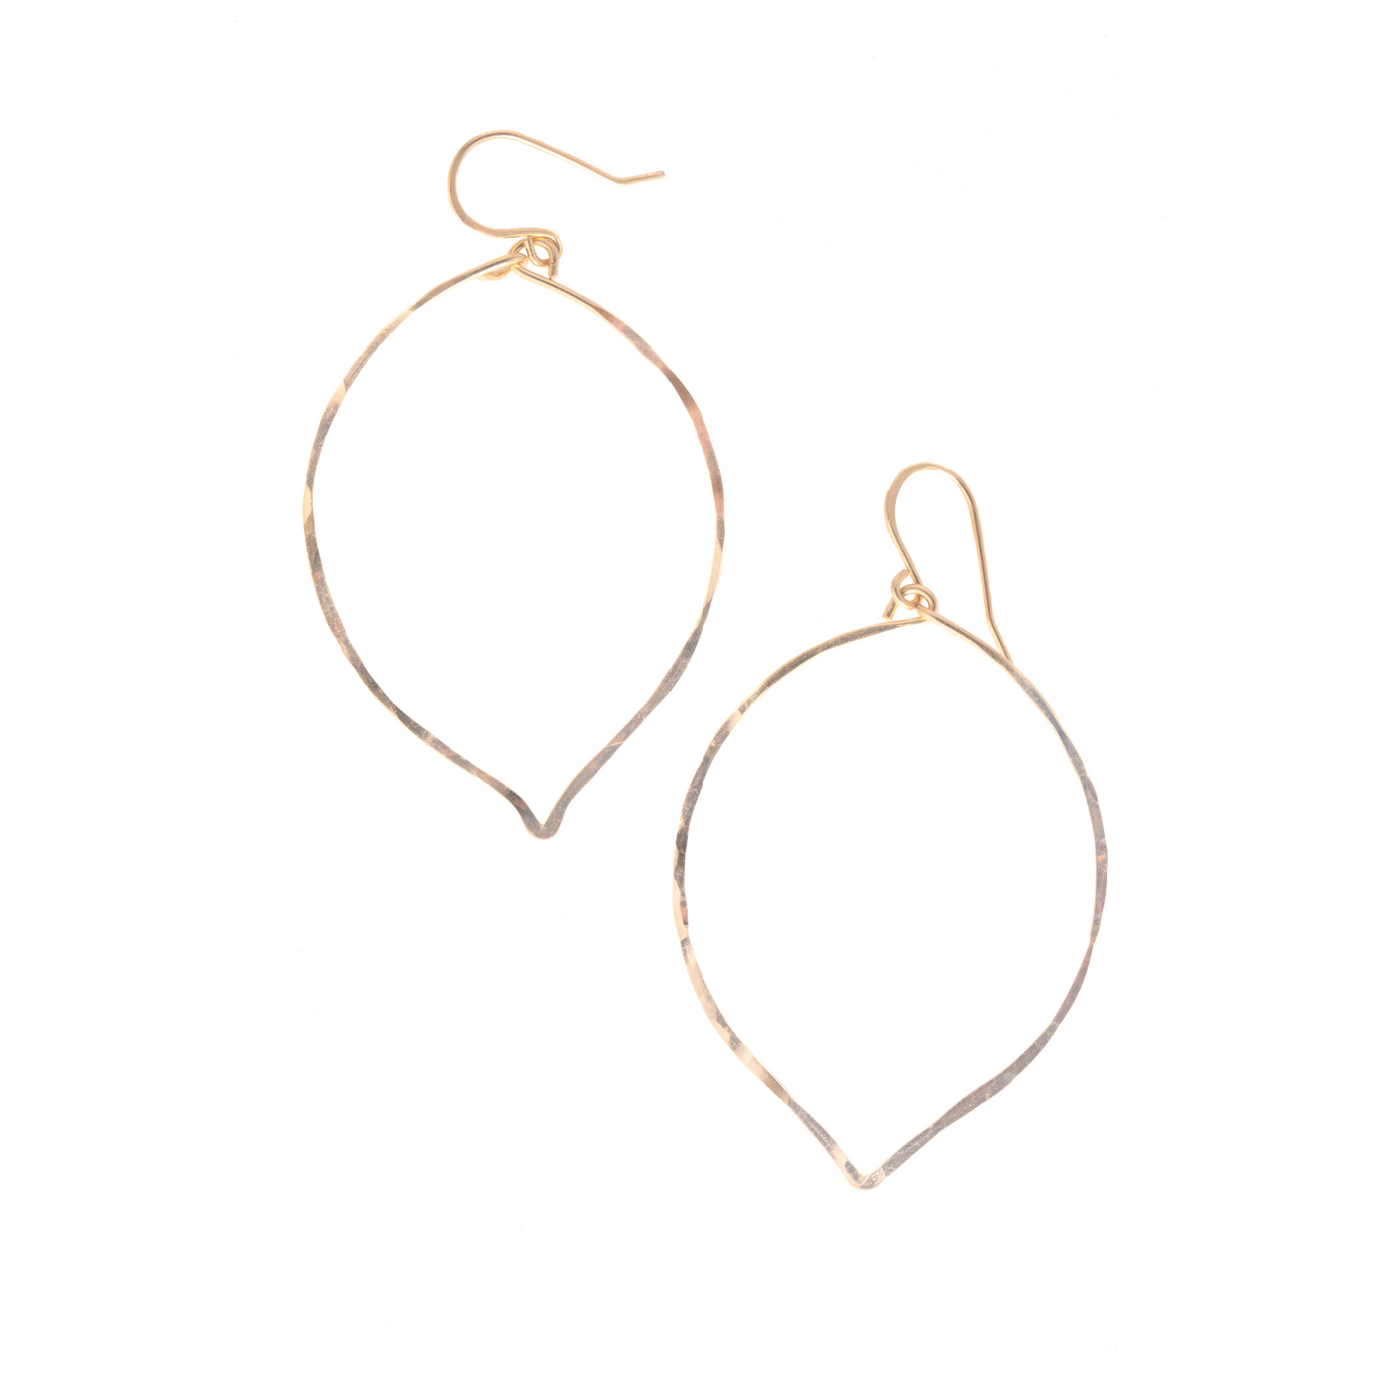 Teressa Lane Jewelry Aminy Gold Earrings